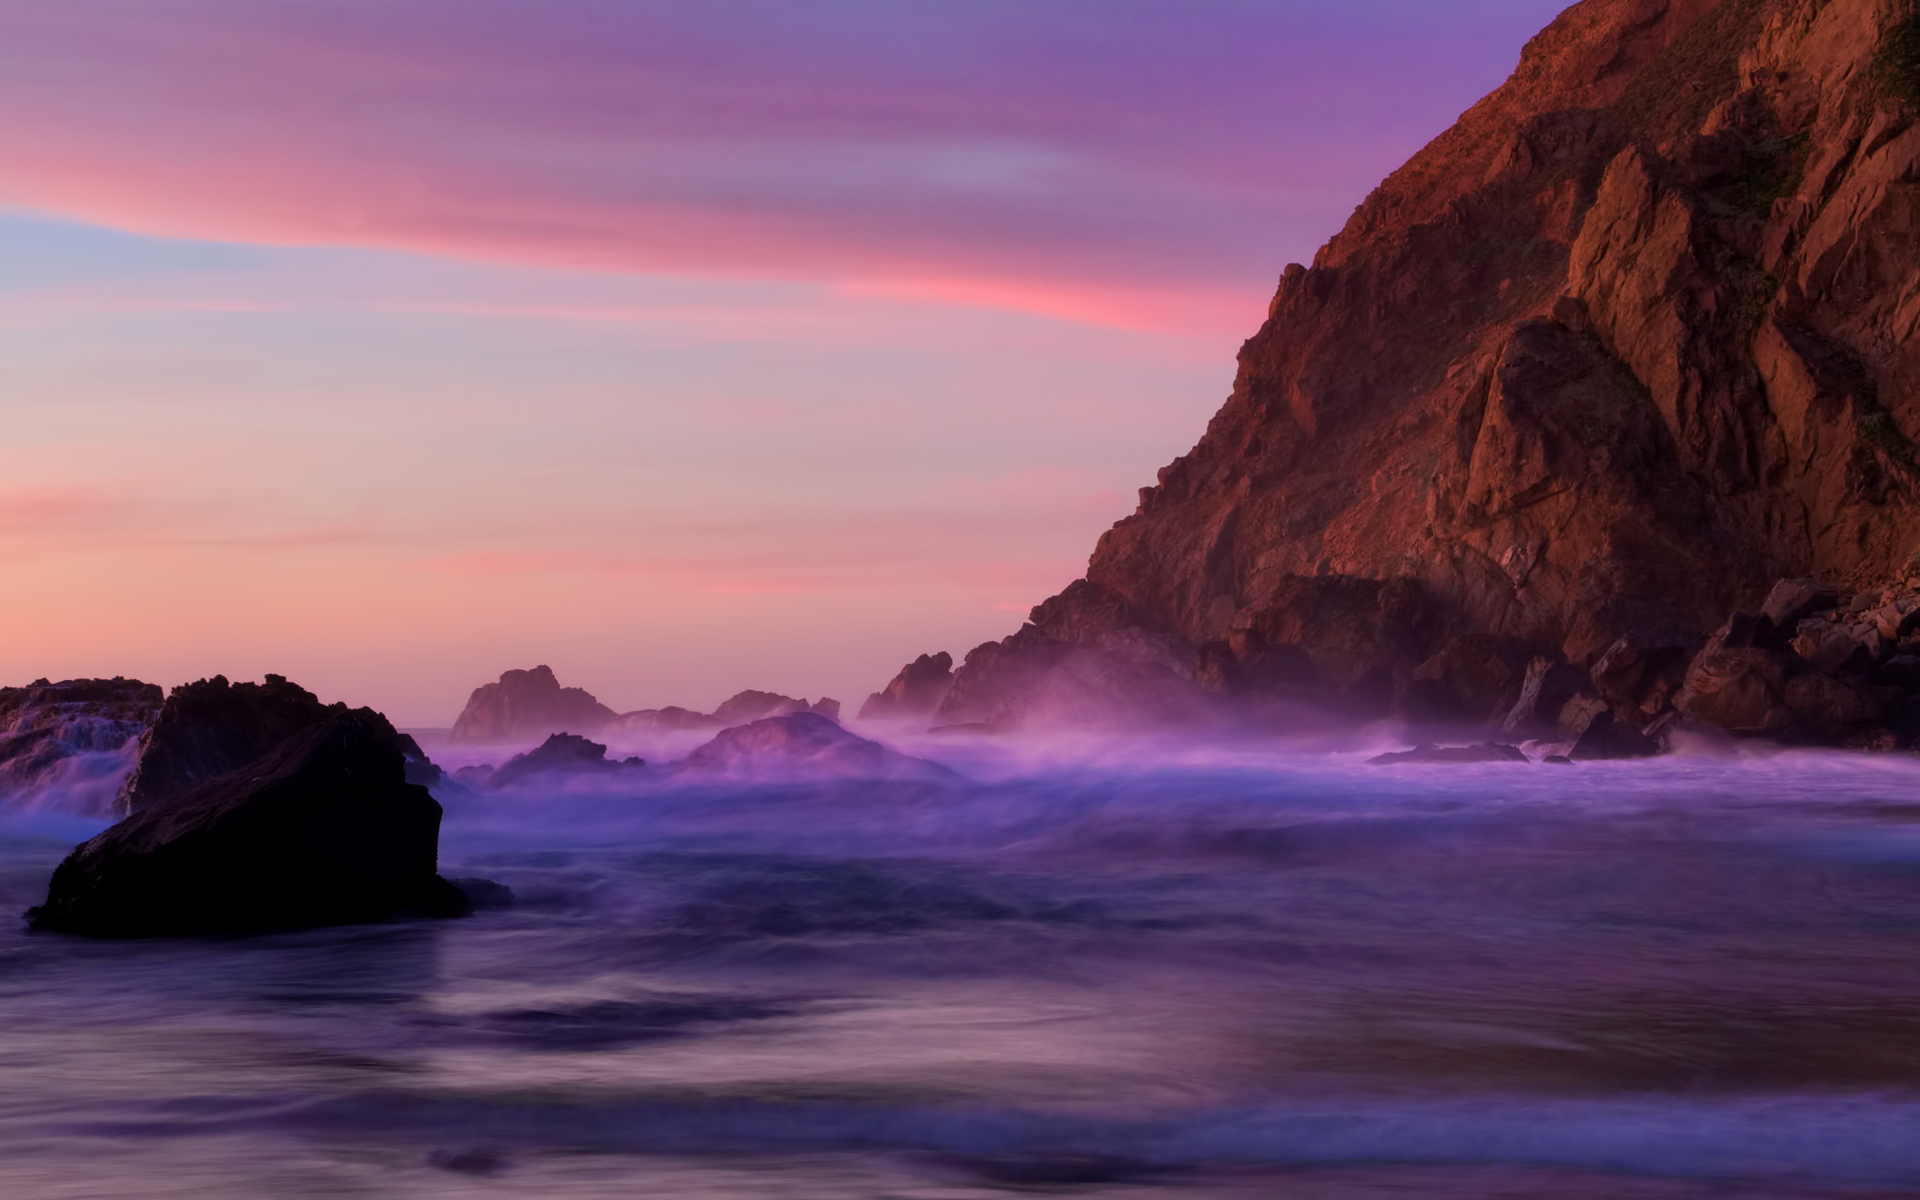 California coast sunset wallpaper 1920x1200 29599 1920x1200